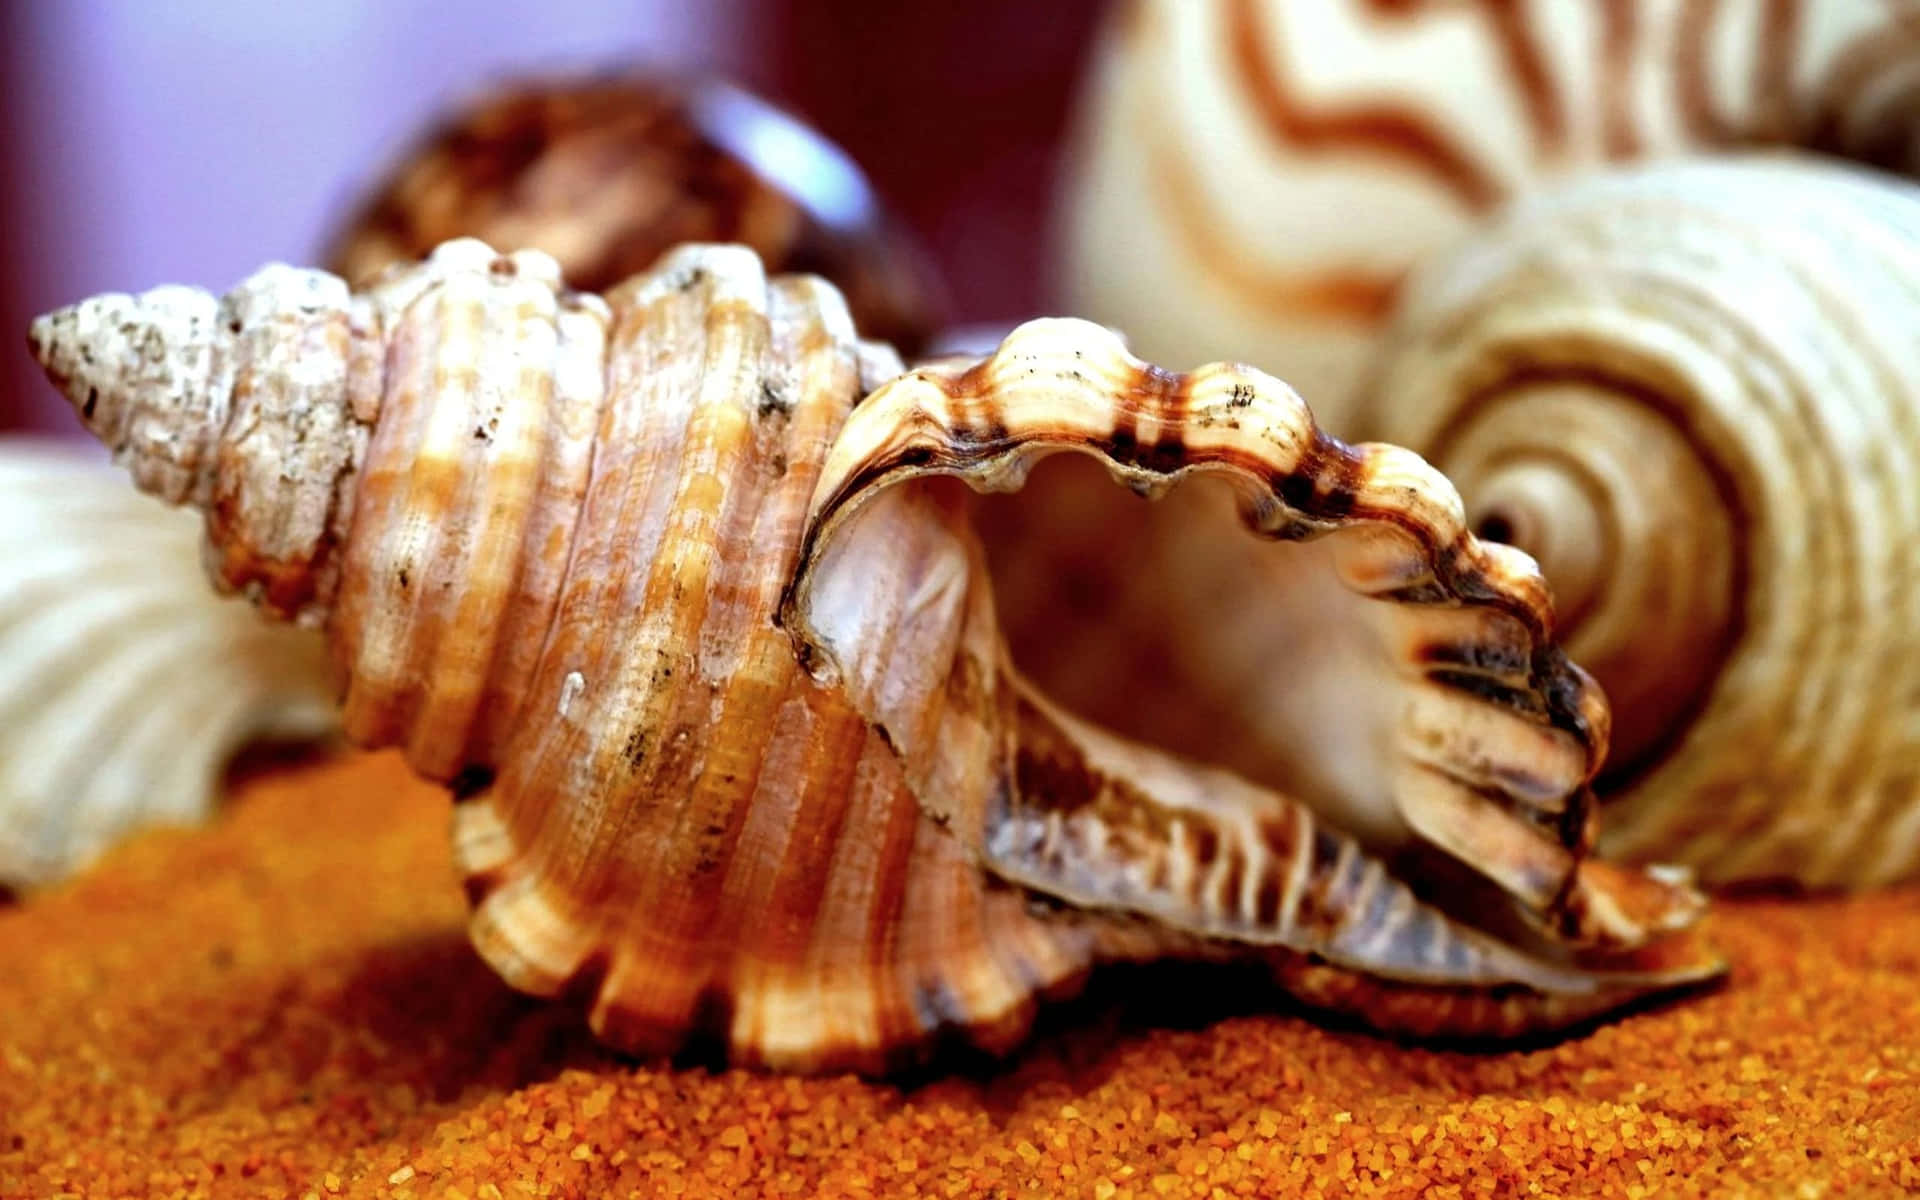 Stunning close-up of a spiral seashell